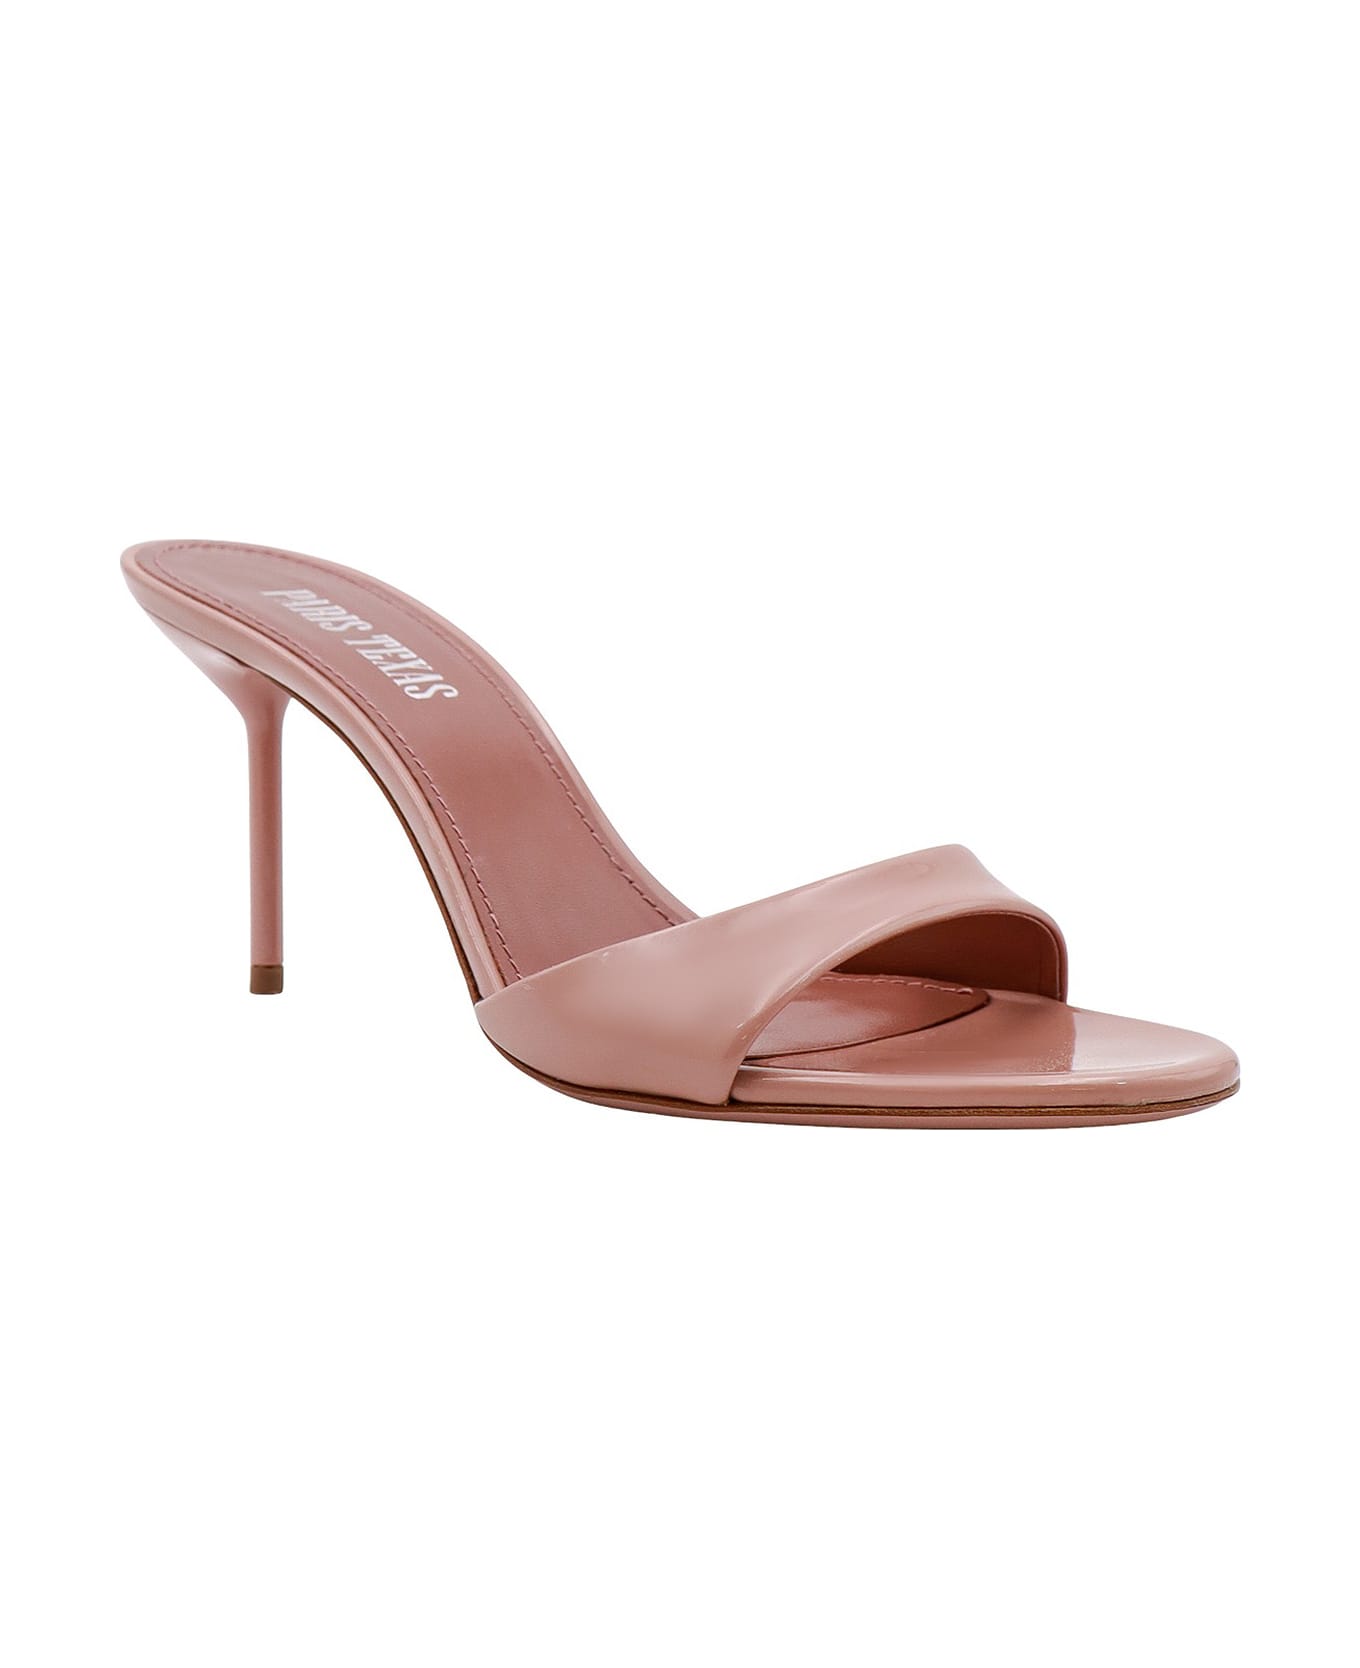 Paris Texas Sandals - Pink サンダル